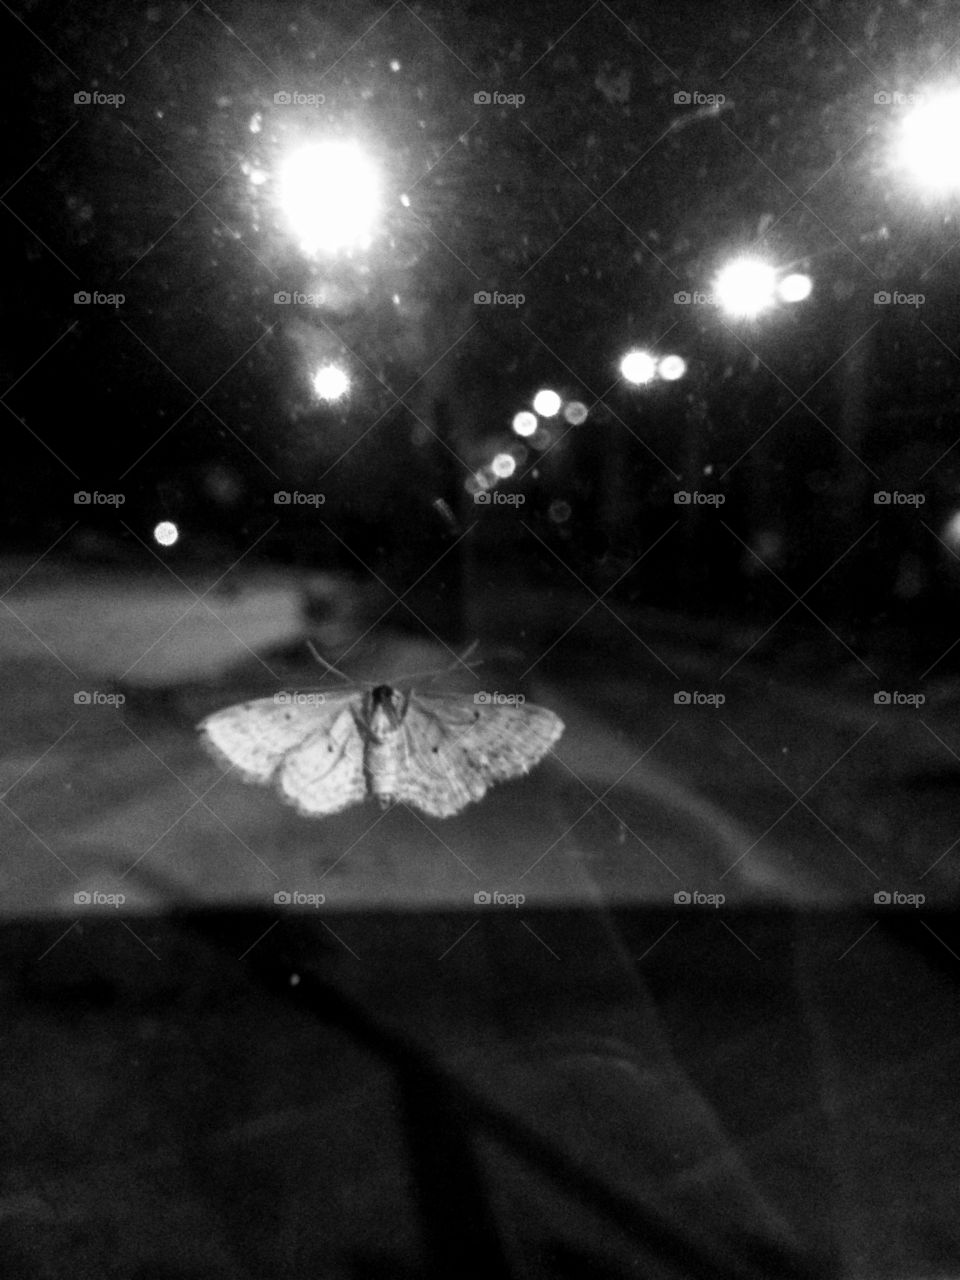 Moth at abandoned bus stop